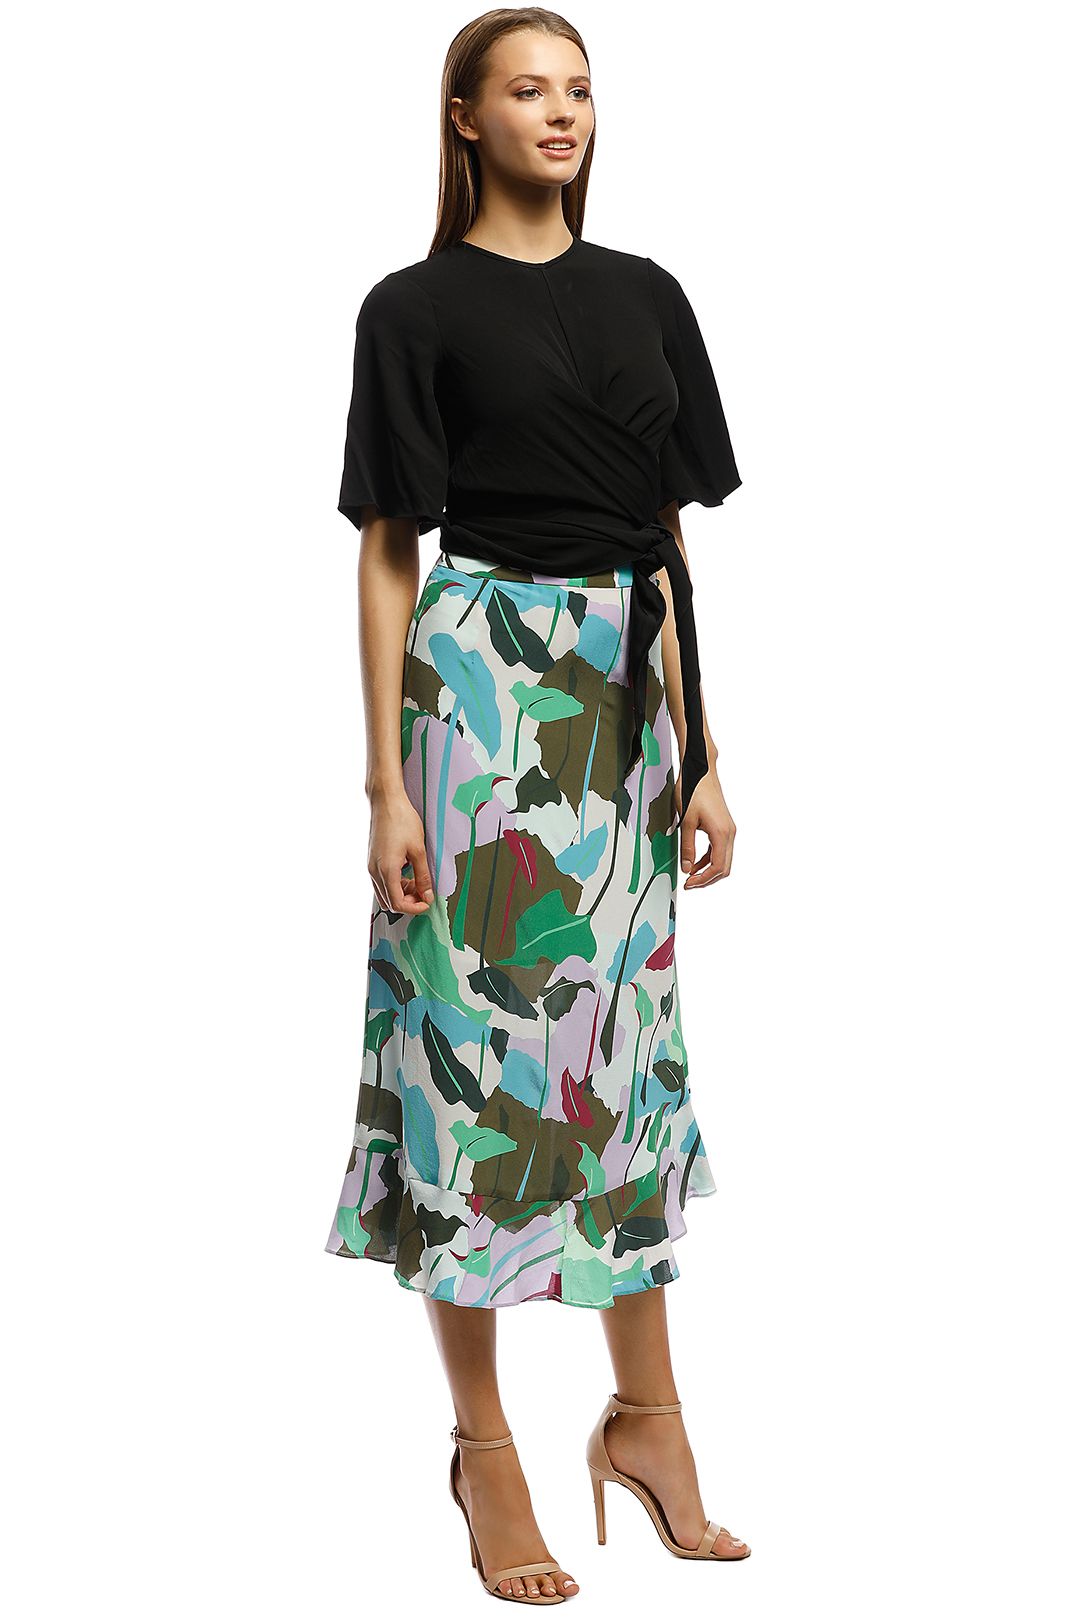 Gorman - Philodendron Silk Skirt - Multi - Side